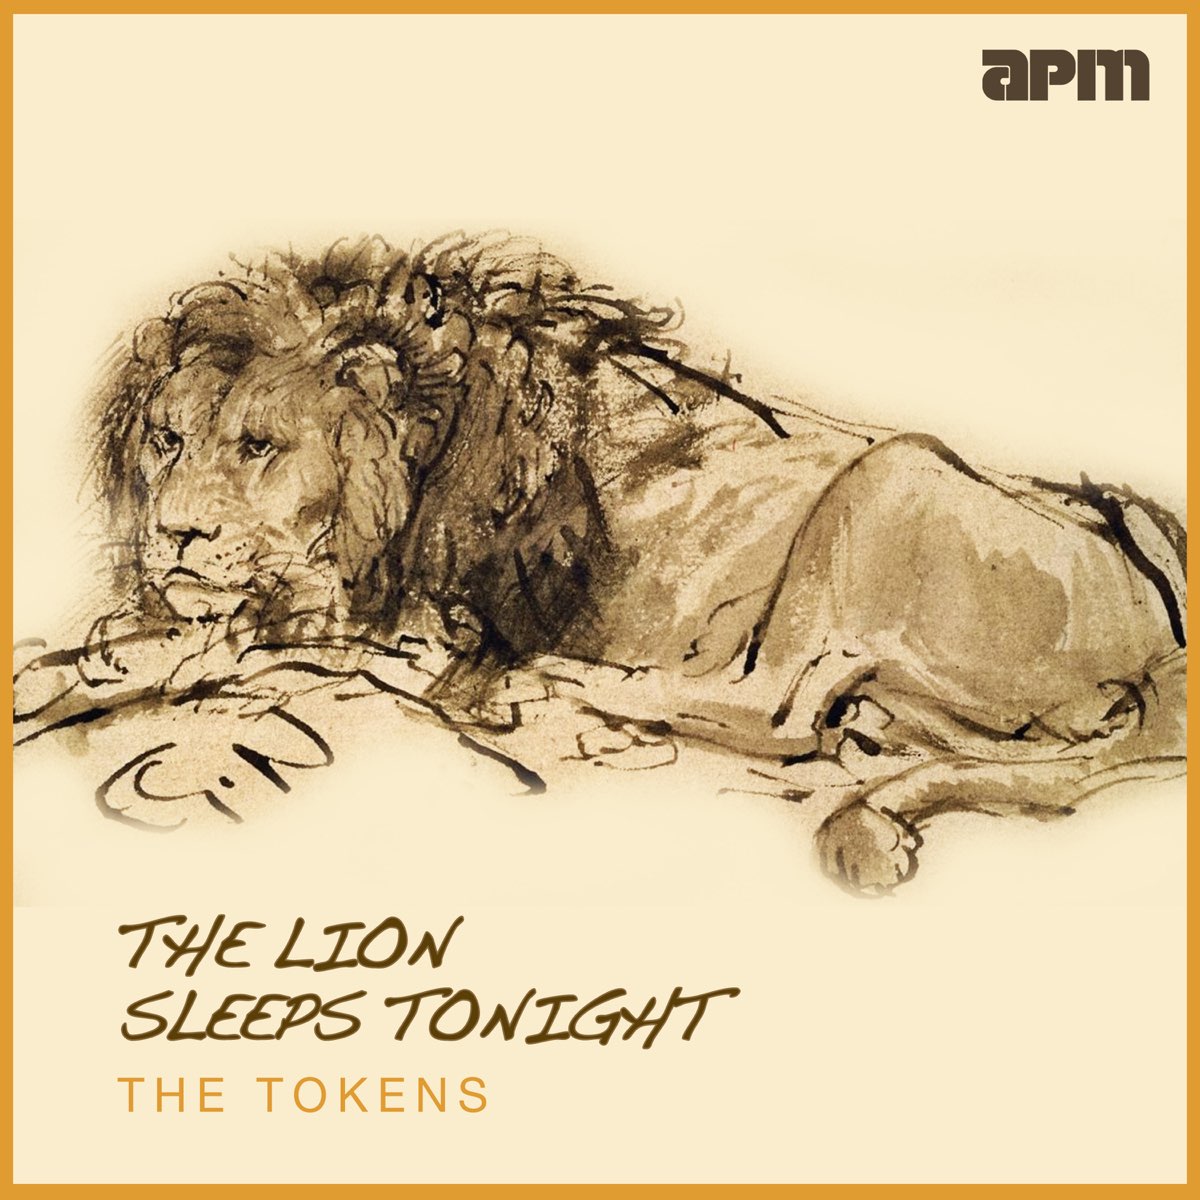 The tokens - the Lion Sleeps Tonight. The Lion Sleeps Tonight the tokens текст. Токен песня. Сон львы дали. Фф sleeping lions автор litmasily